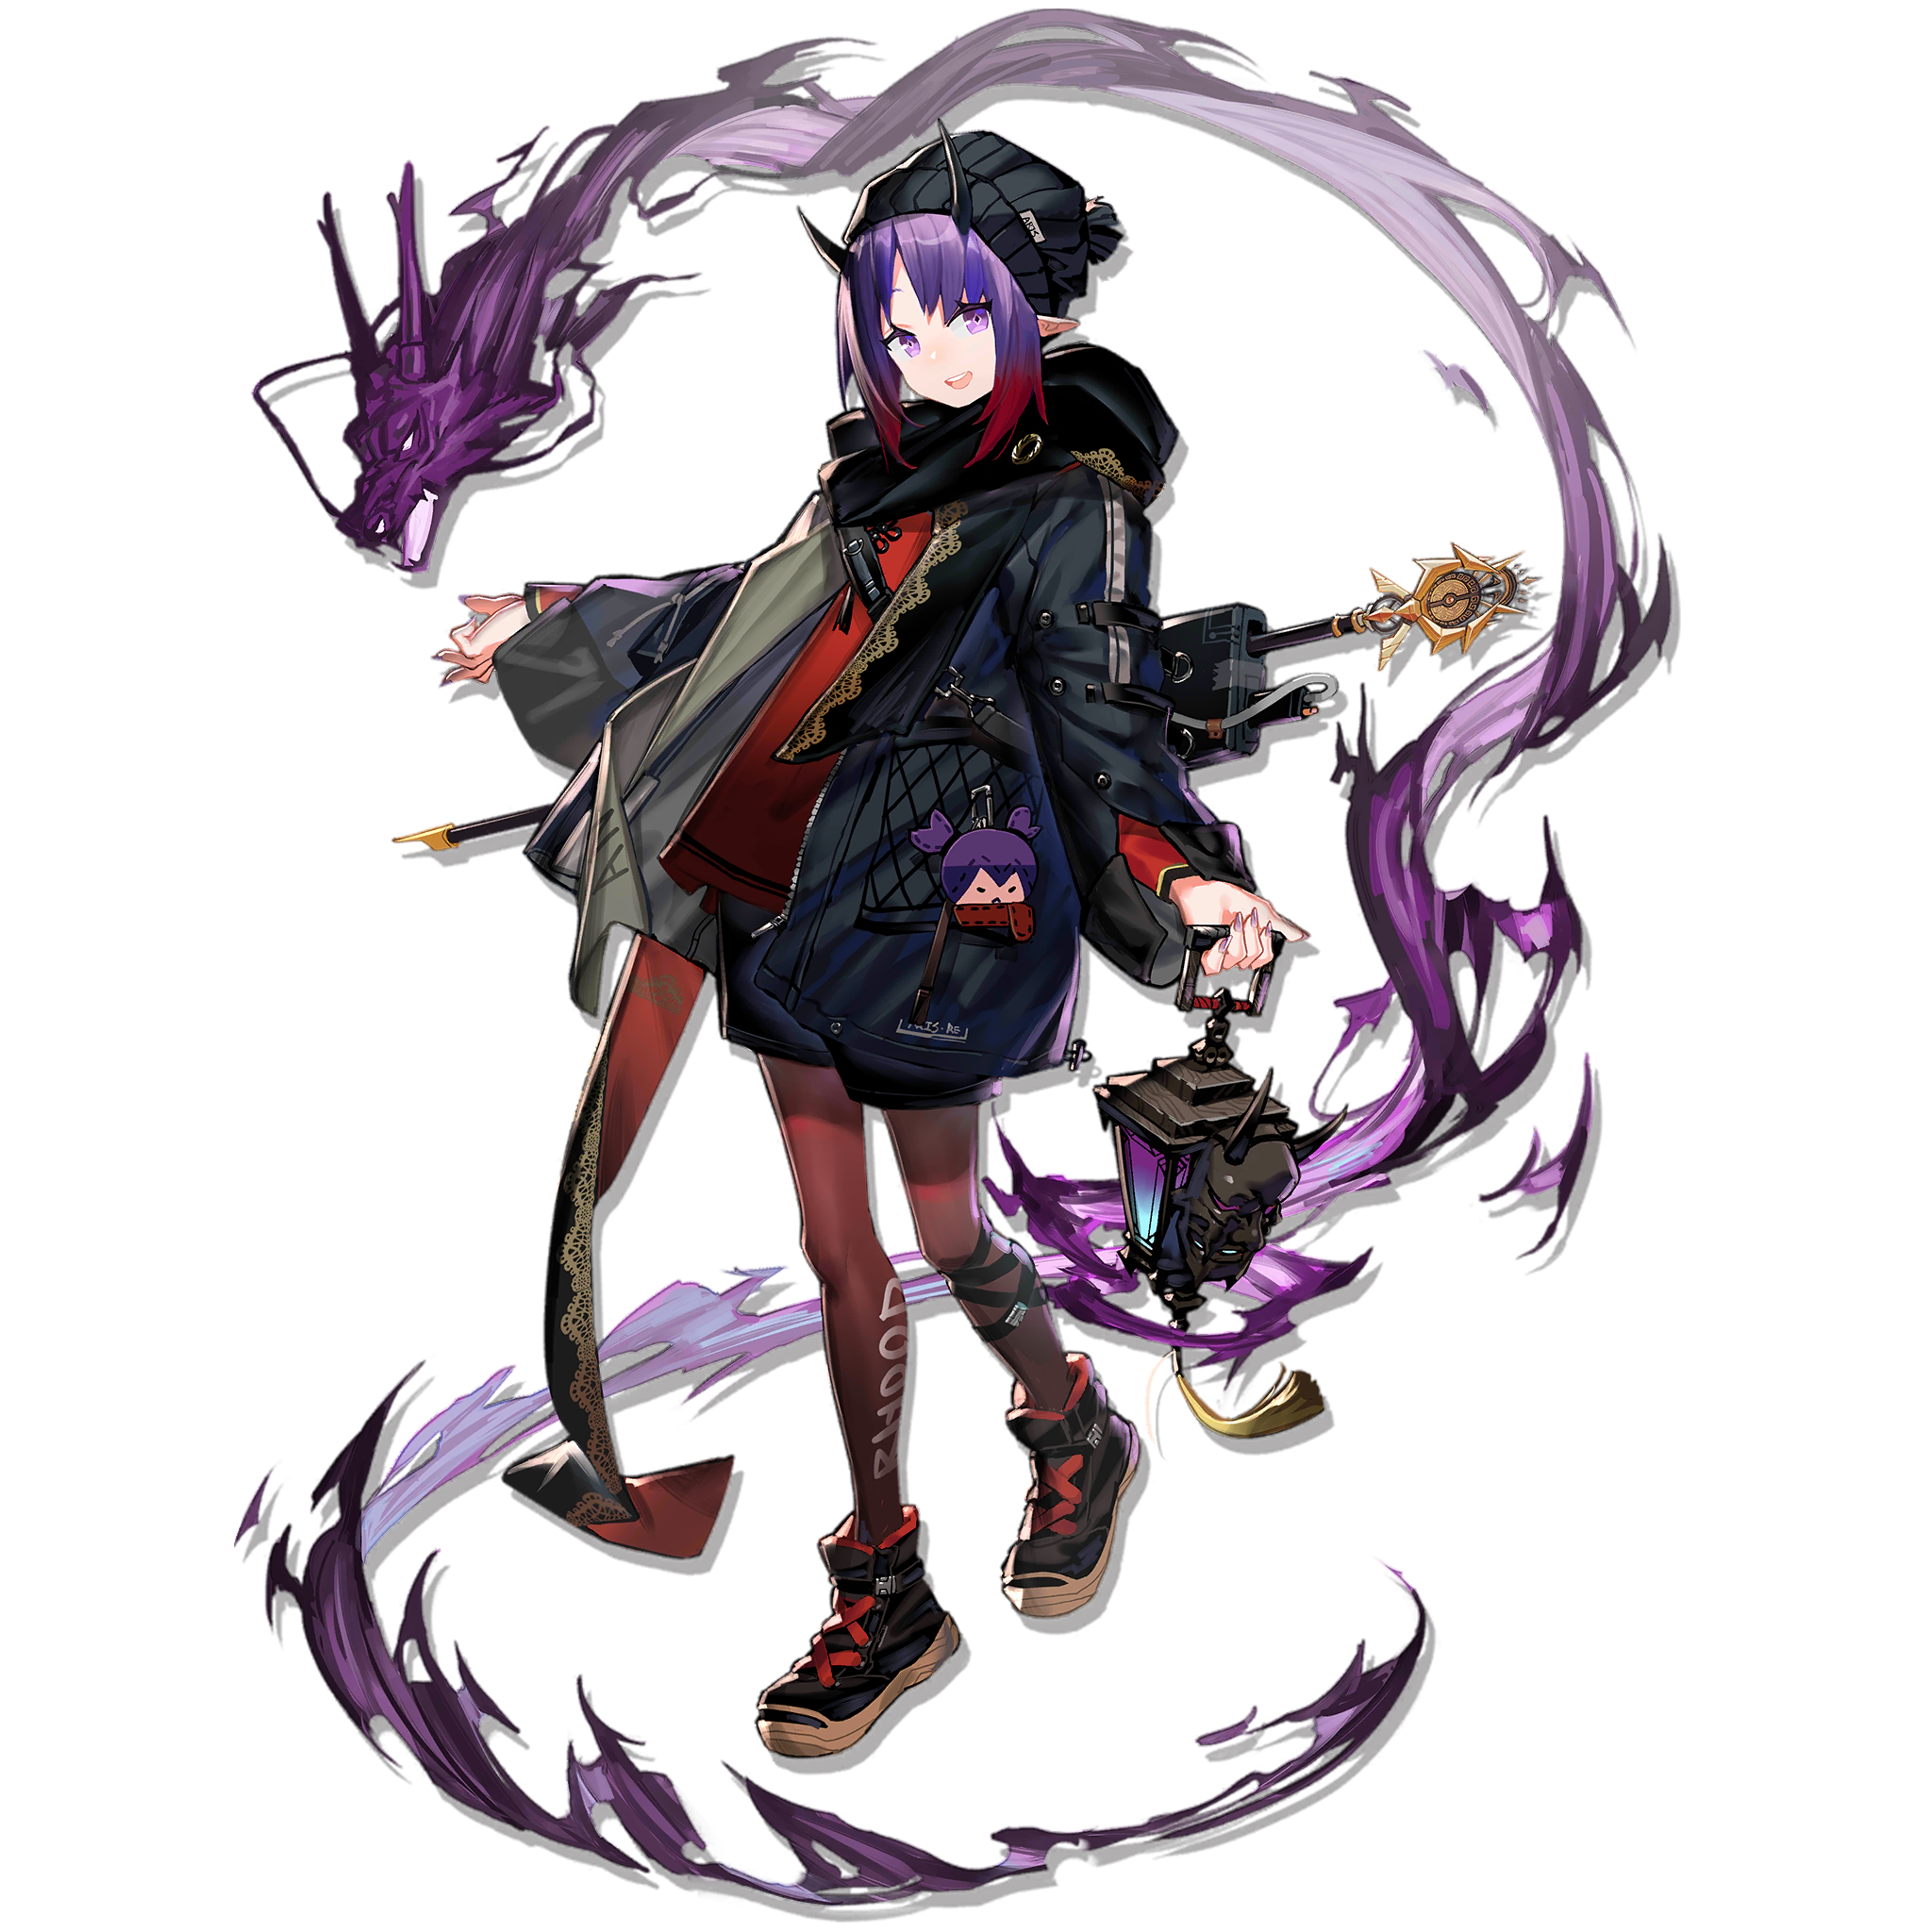 Anime 2048x2048 Arknights anime anime girls purple hair black background